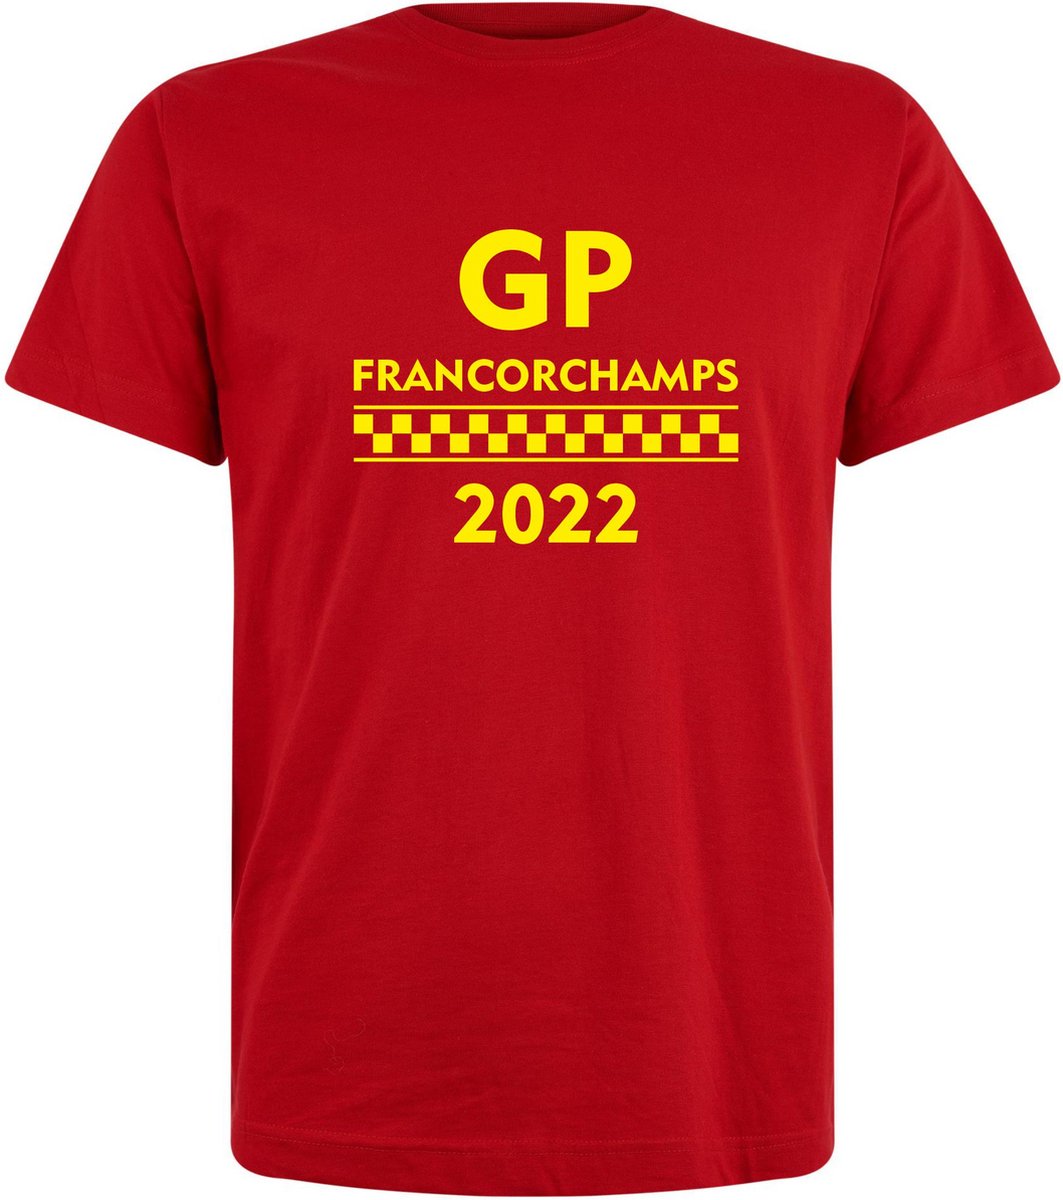 T-shirt kinderen GP Francorchamps 2022 | Max Verstappen / Red Bull Racing / Formule 1 fan | Grand Prix Circuit Spa-Francorchamps | kleding shirt | Rood | maat 140